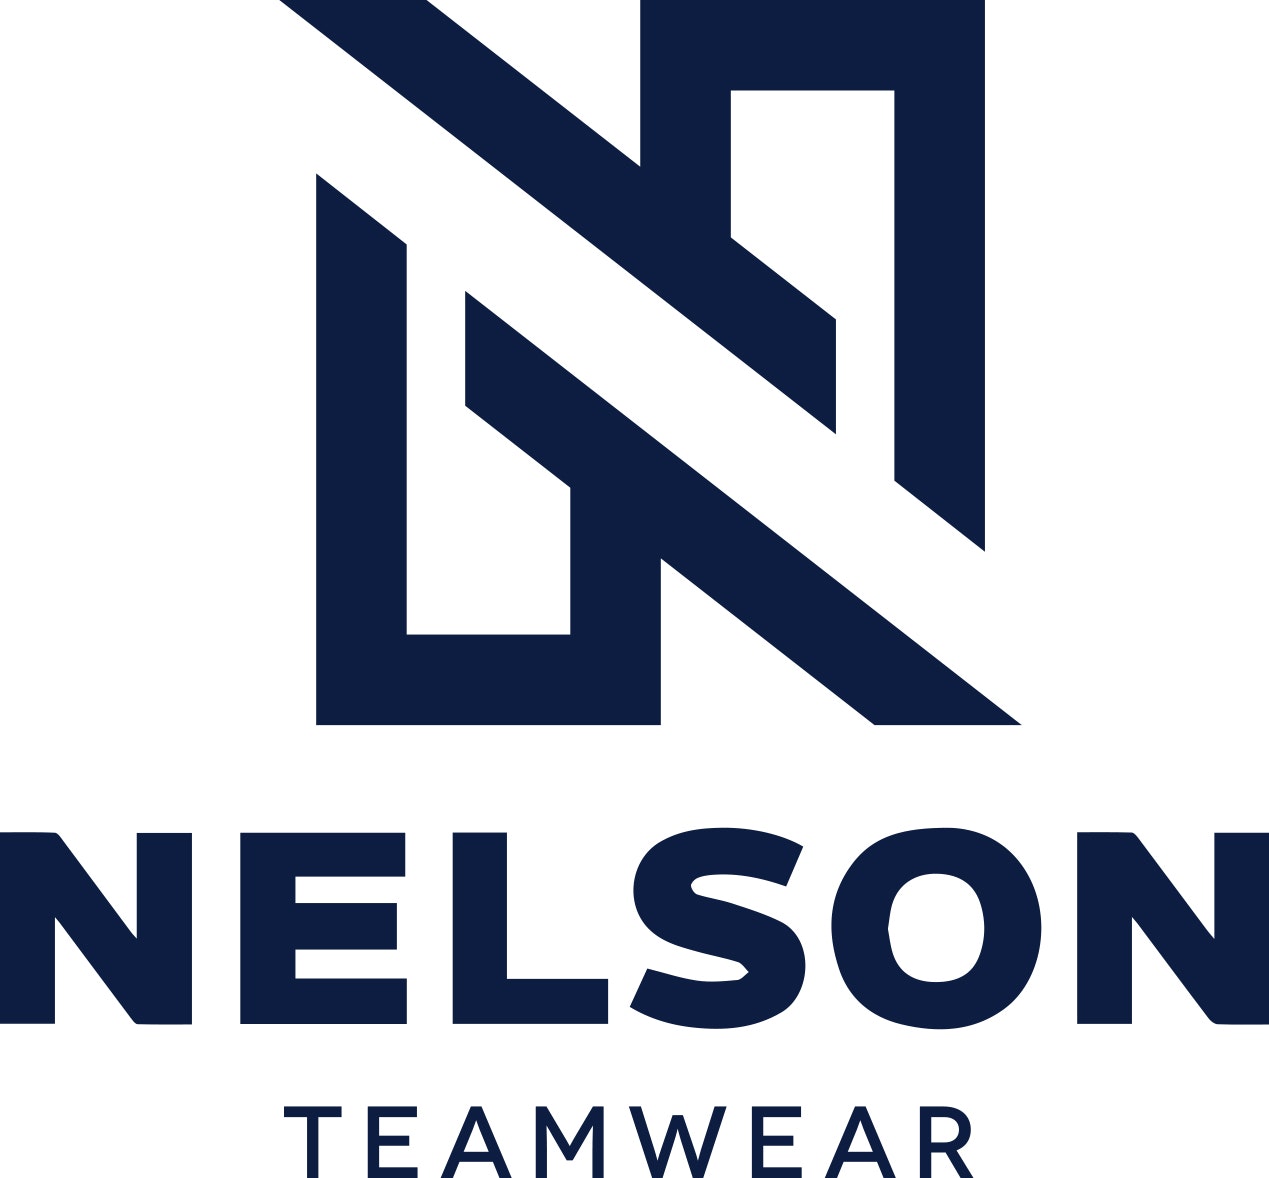 Nelson Teamwear